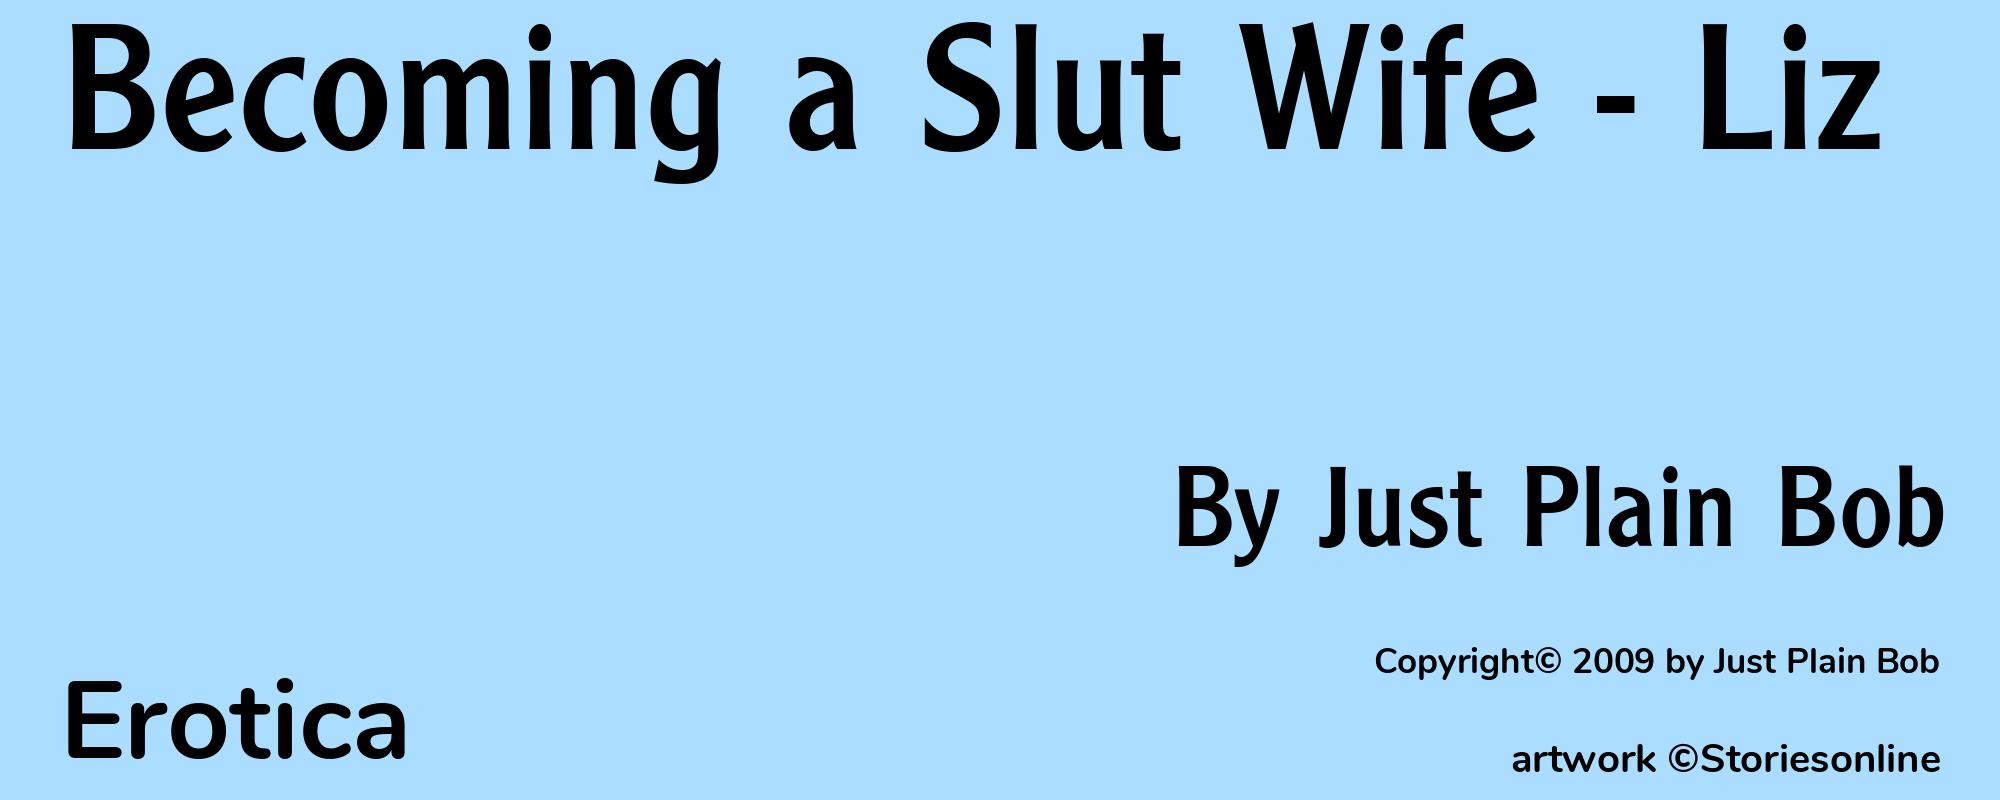 Becoming a Slut Wife - Liz - Cover